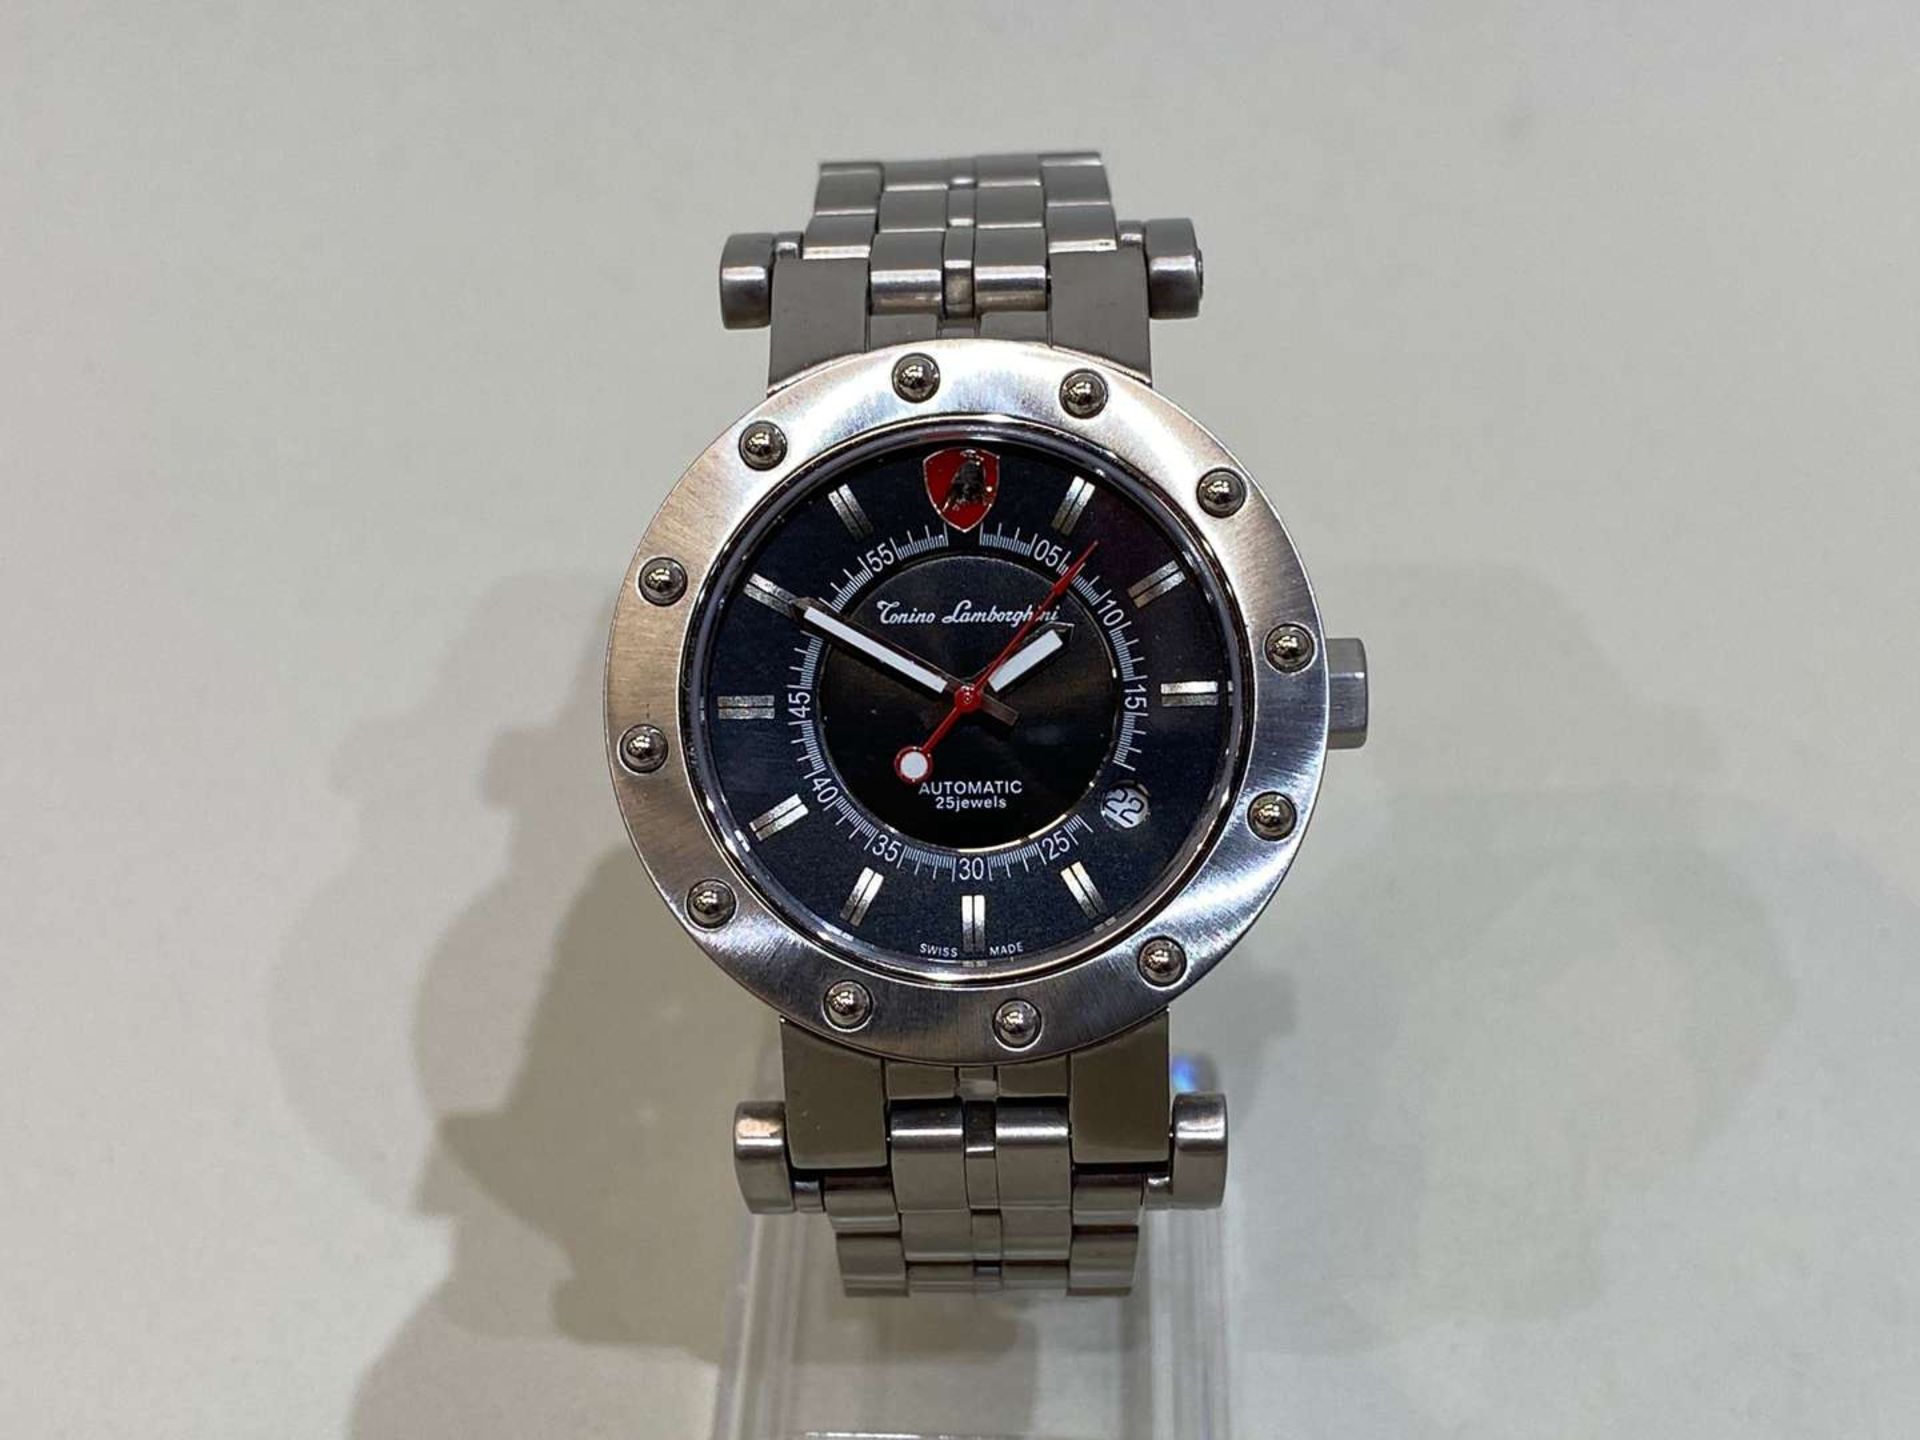 TONINO LAMBORGHINI, FERRUCCIO 2000, a stainless steel, automatic, centre seconds, calendar watch,